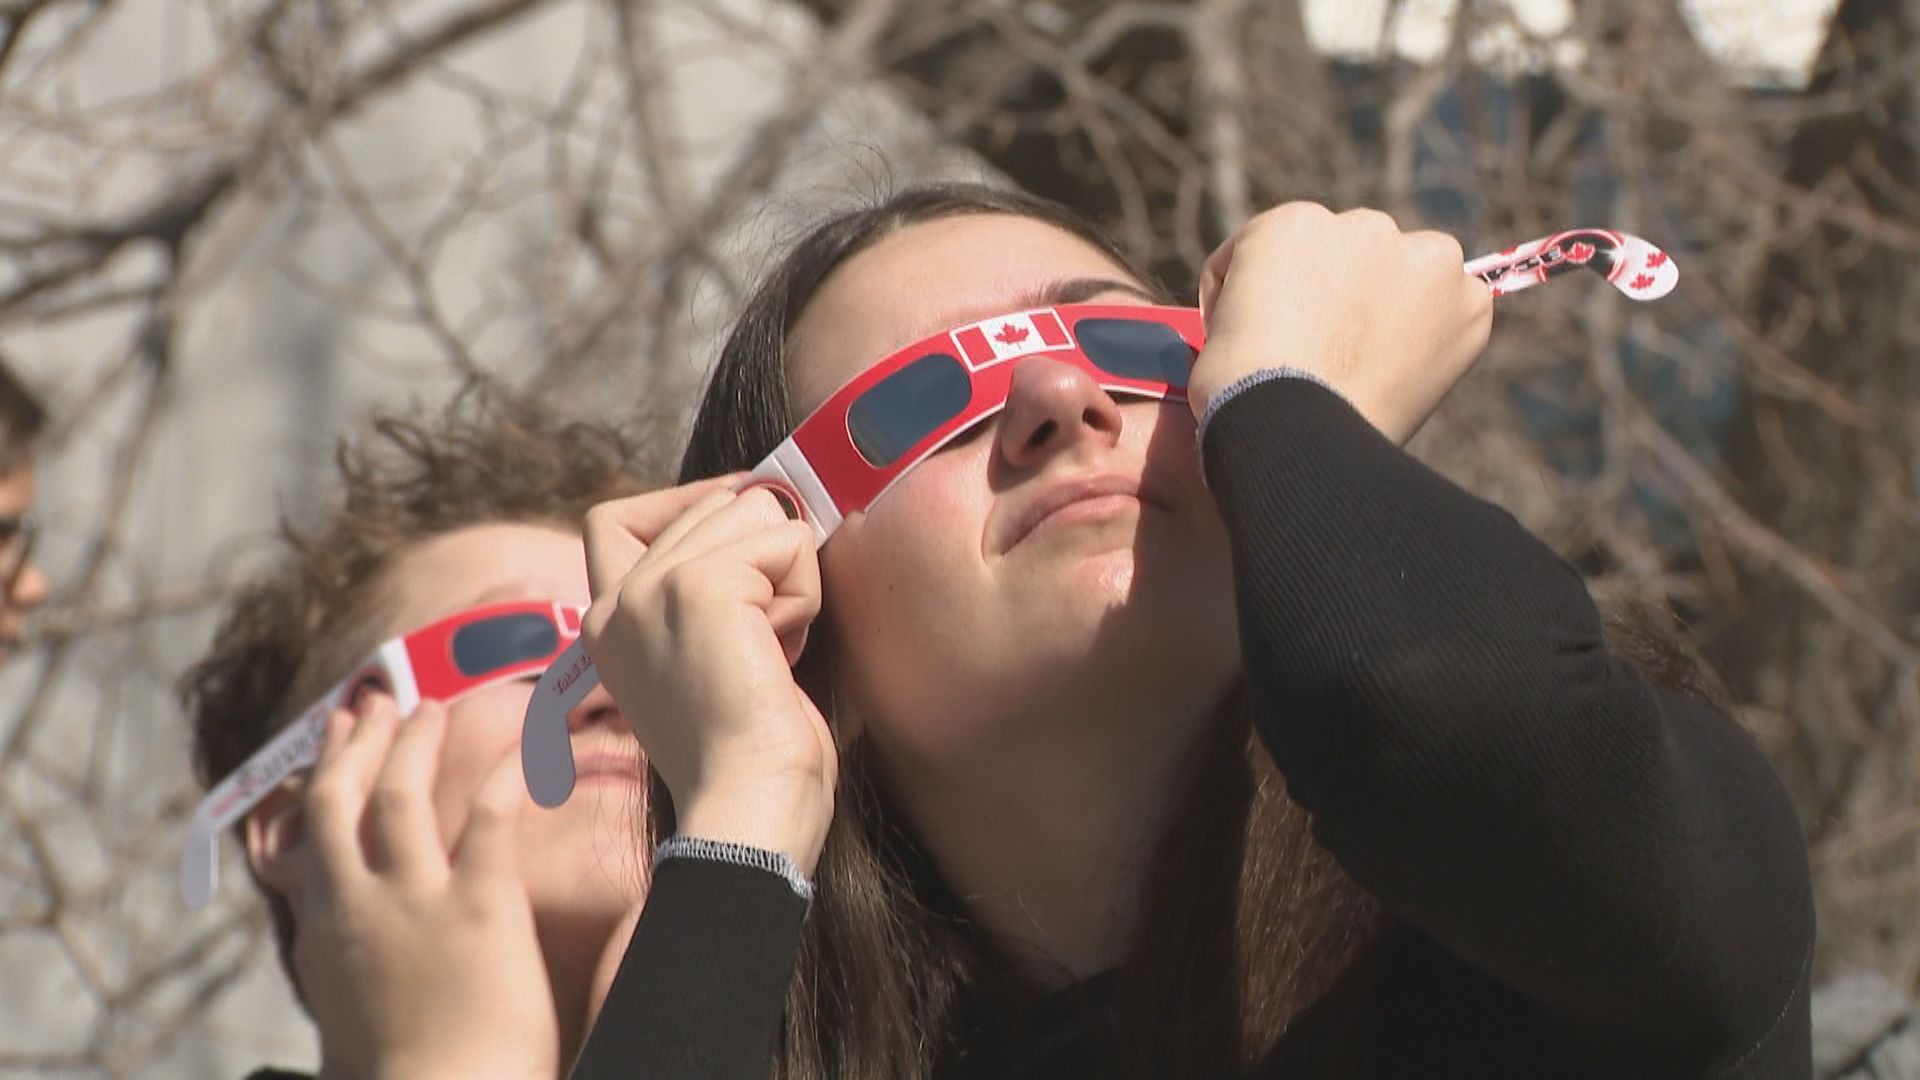 Saskatchewan celebrates solar eclipse with science centre viewing party